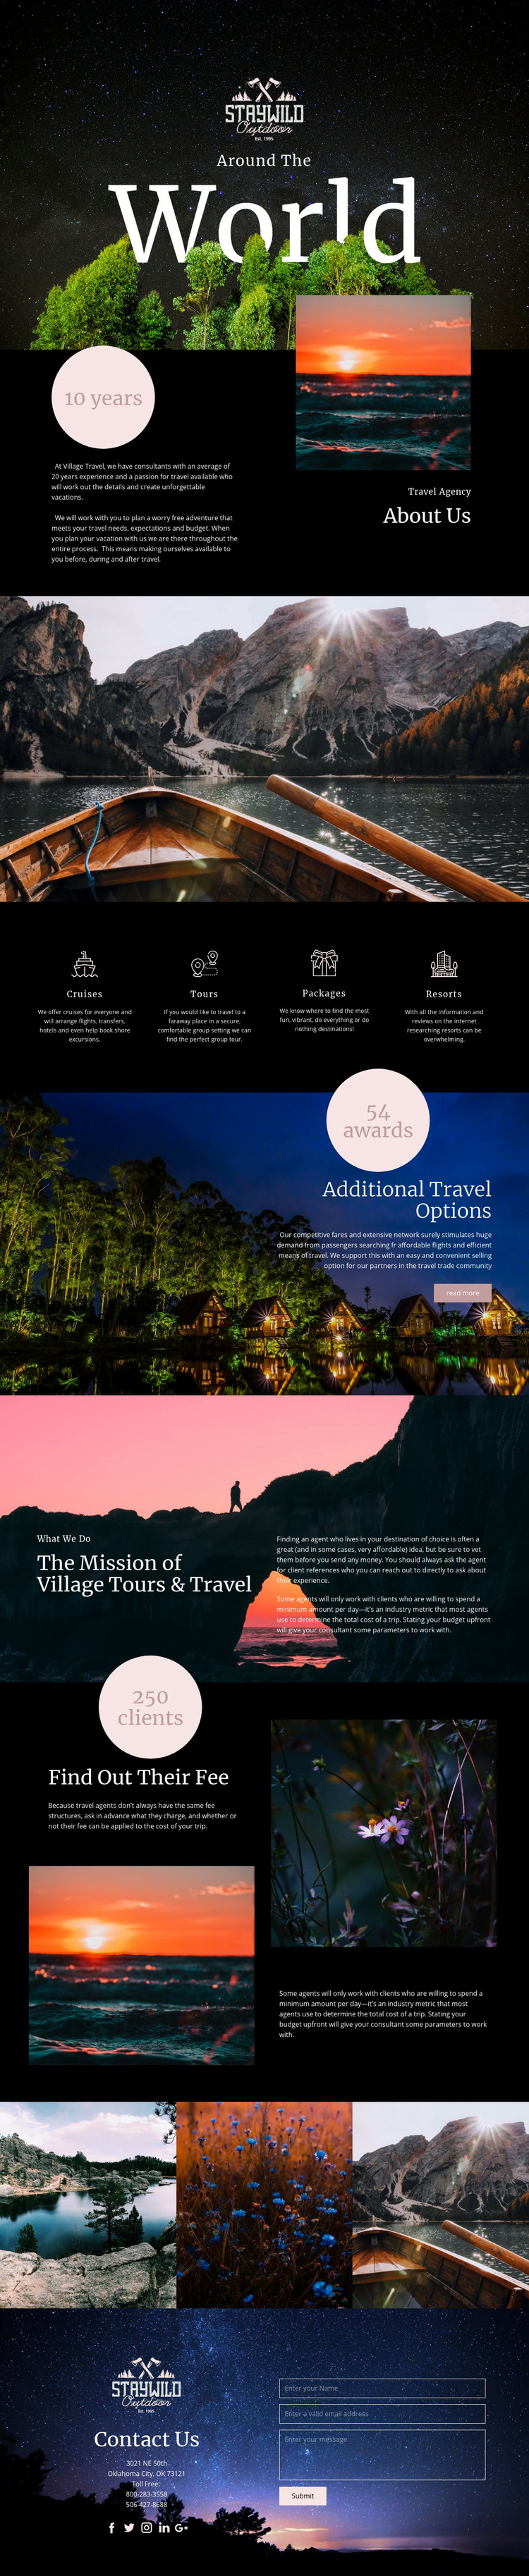 Around the World Homepage Design